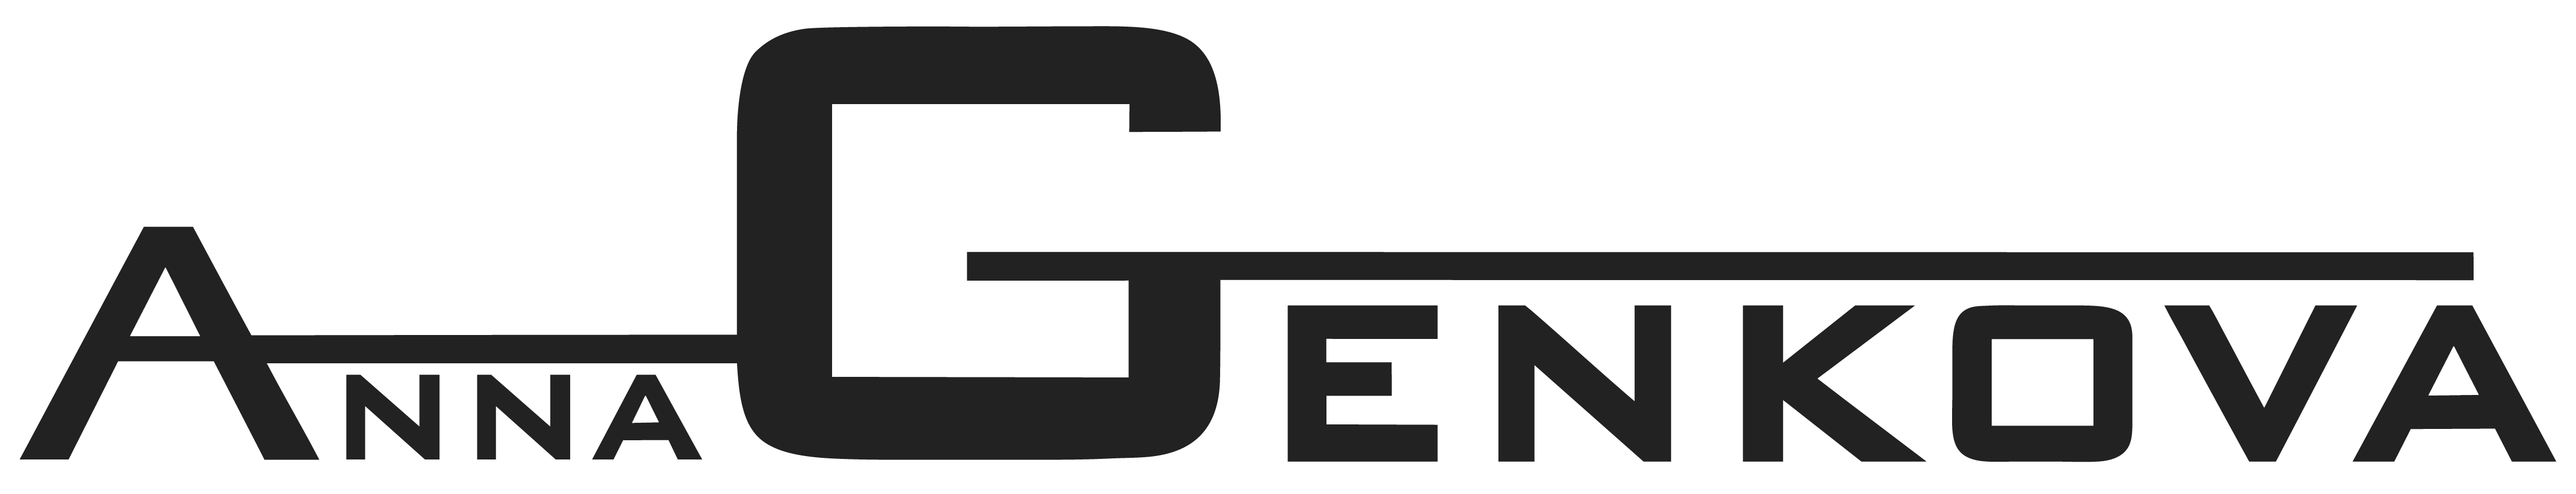 ANNA GENKOVA DESIGN Logo